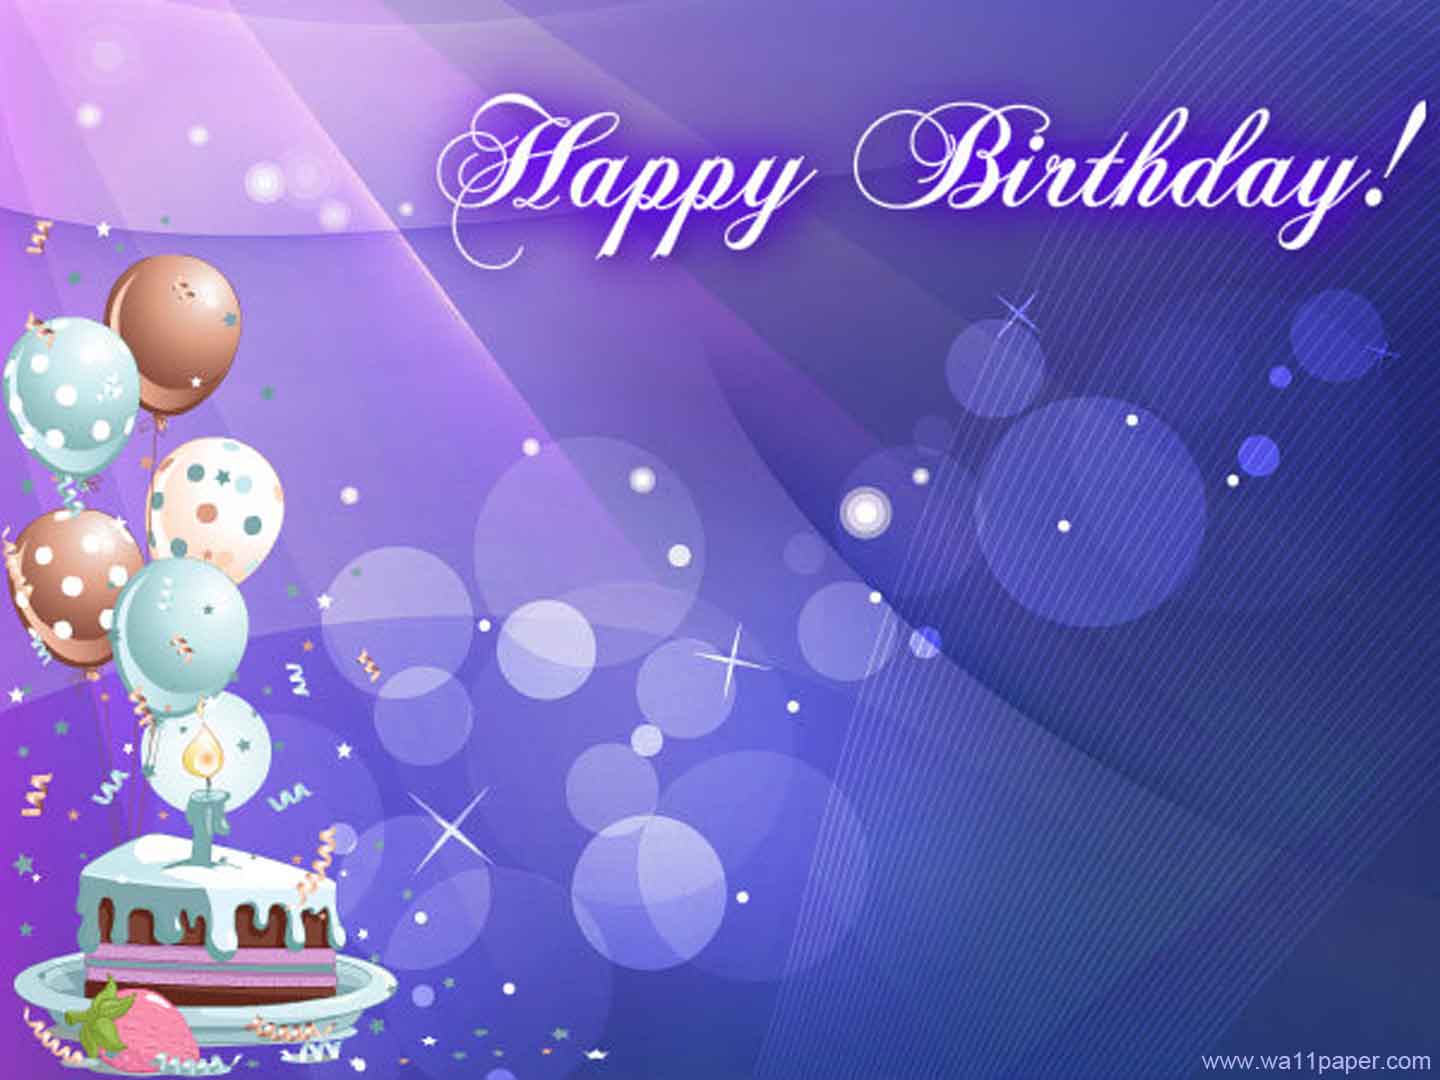 Happy Birthday Backgrounds Image